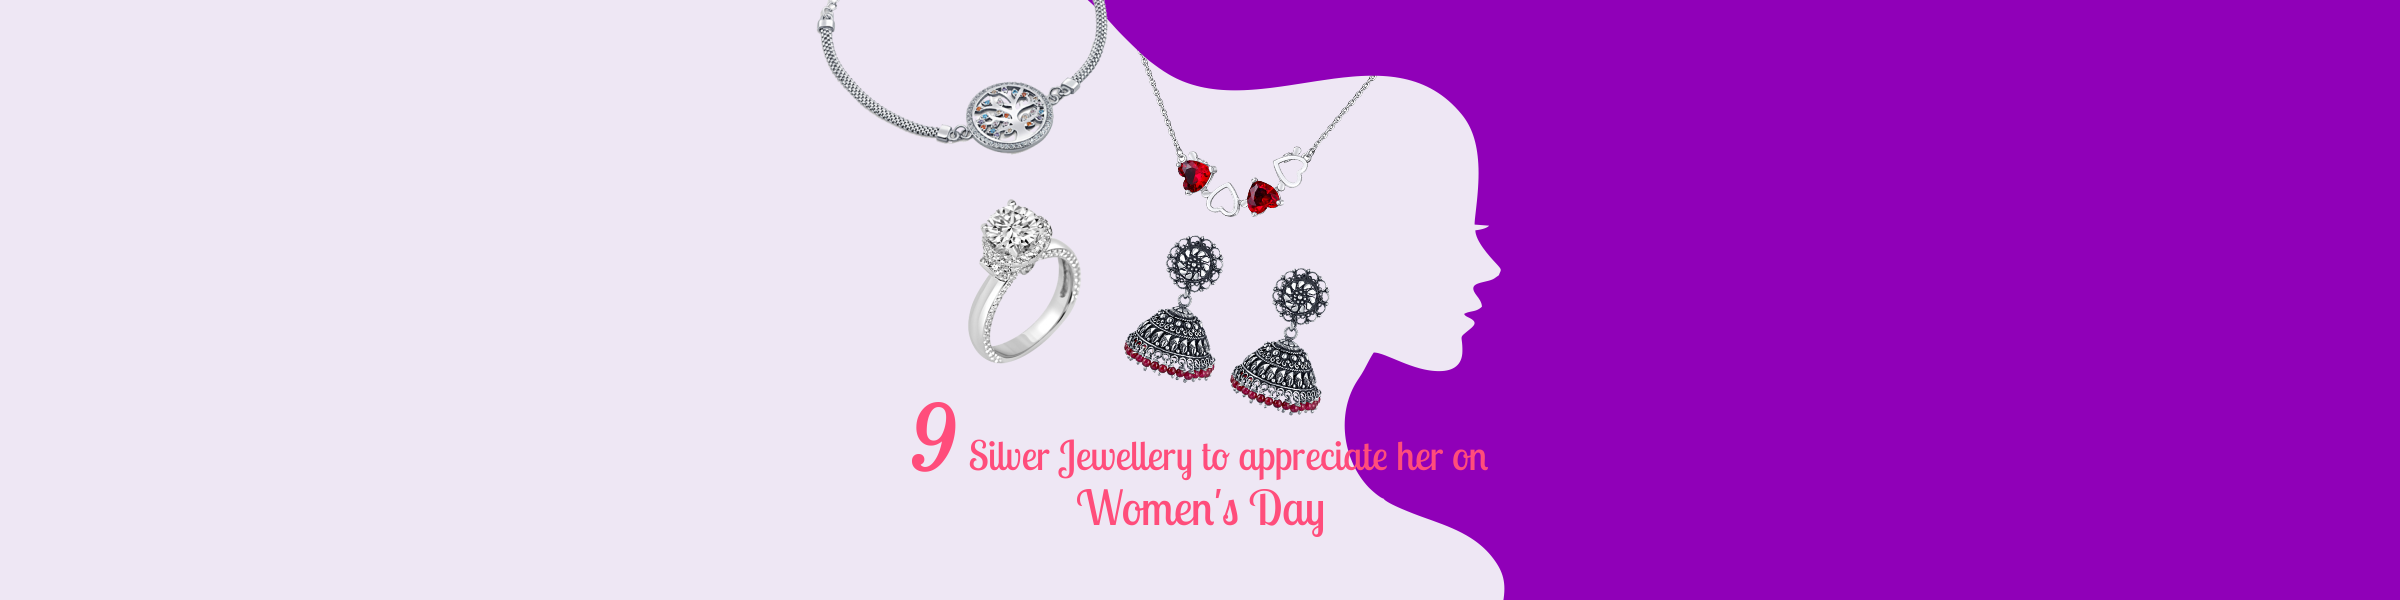 9 Silver Jewellery to Appreciate Her on Women’s Day